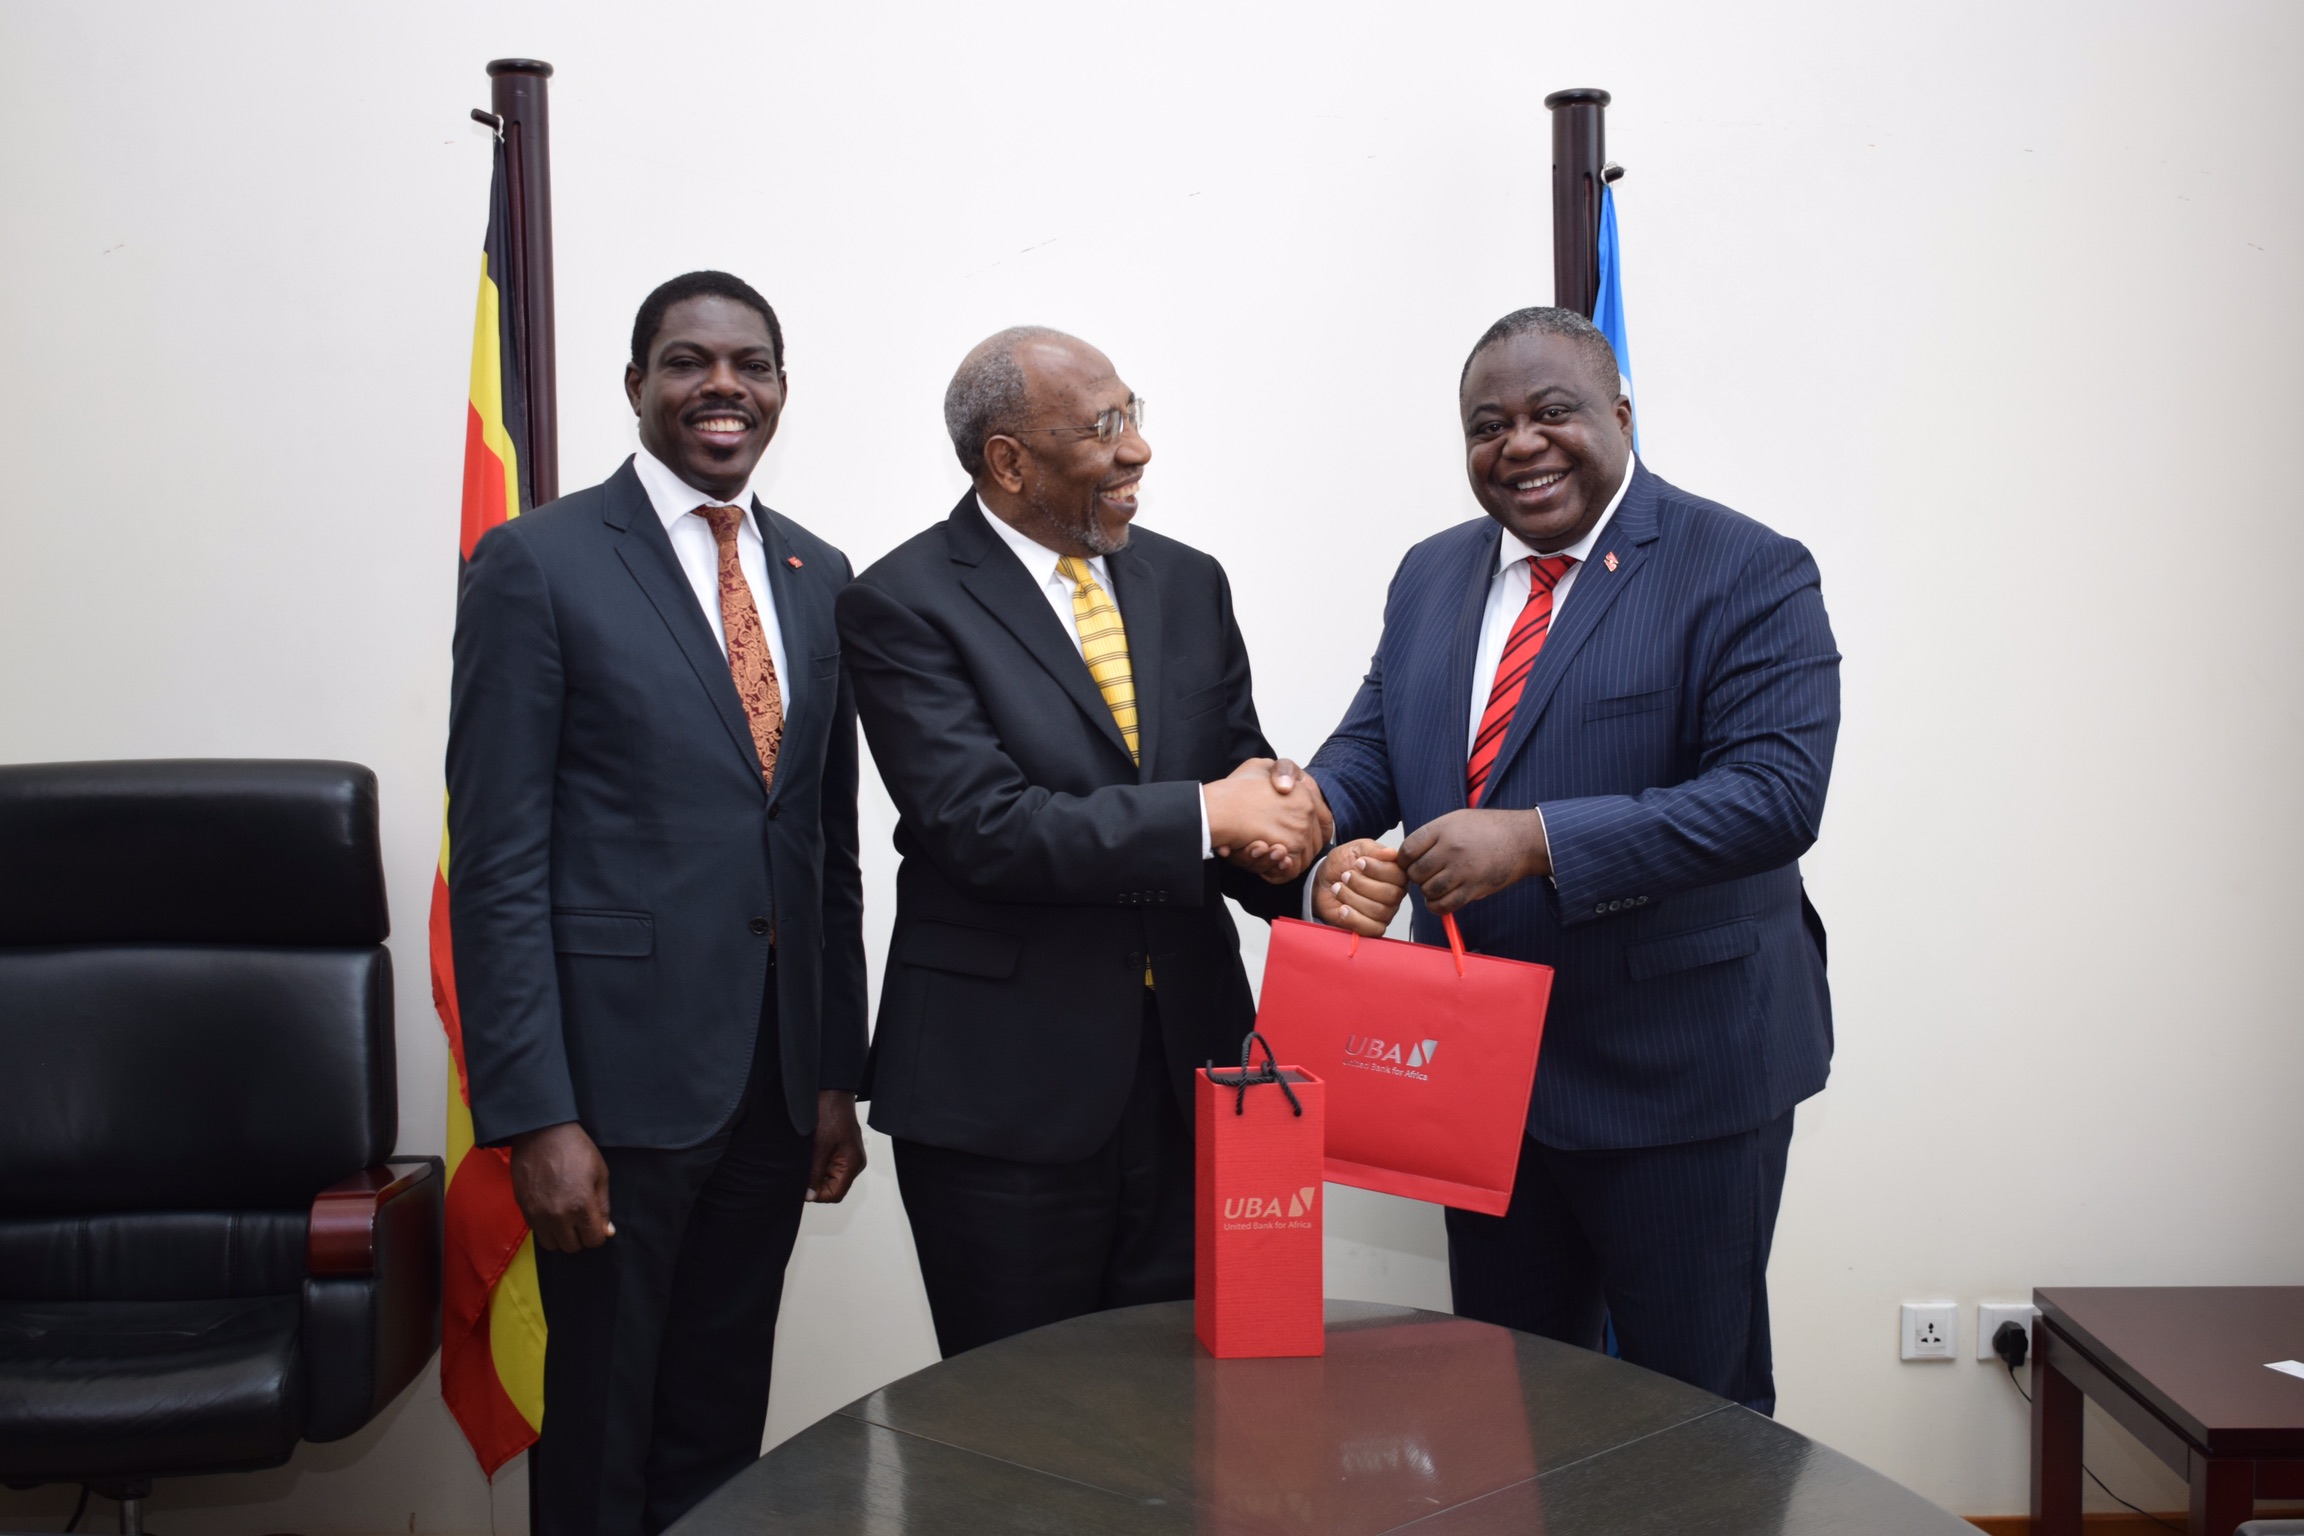 UBA Regional Boss in Uganda to Strike Partnership with Government